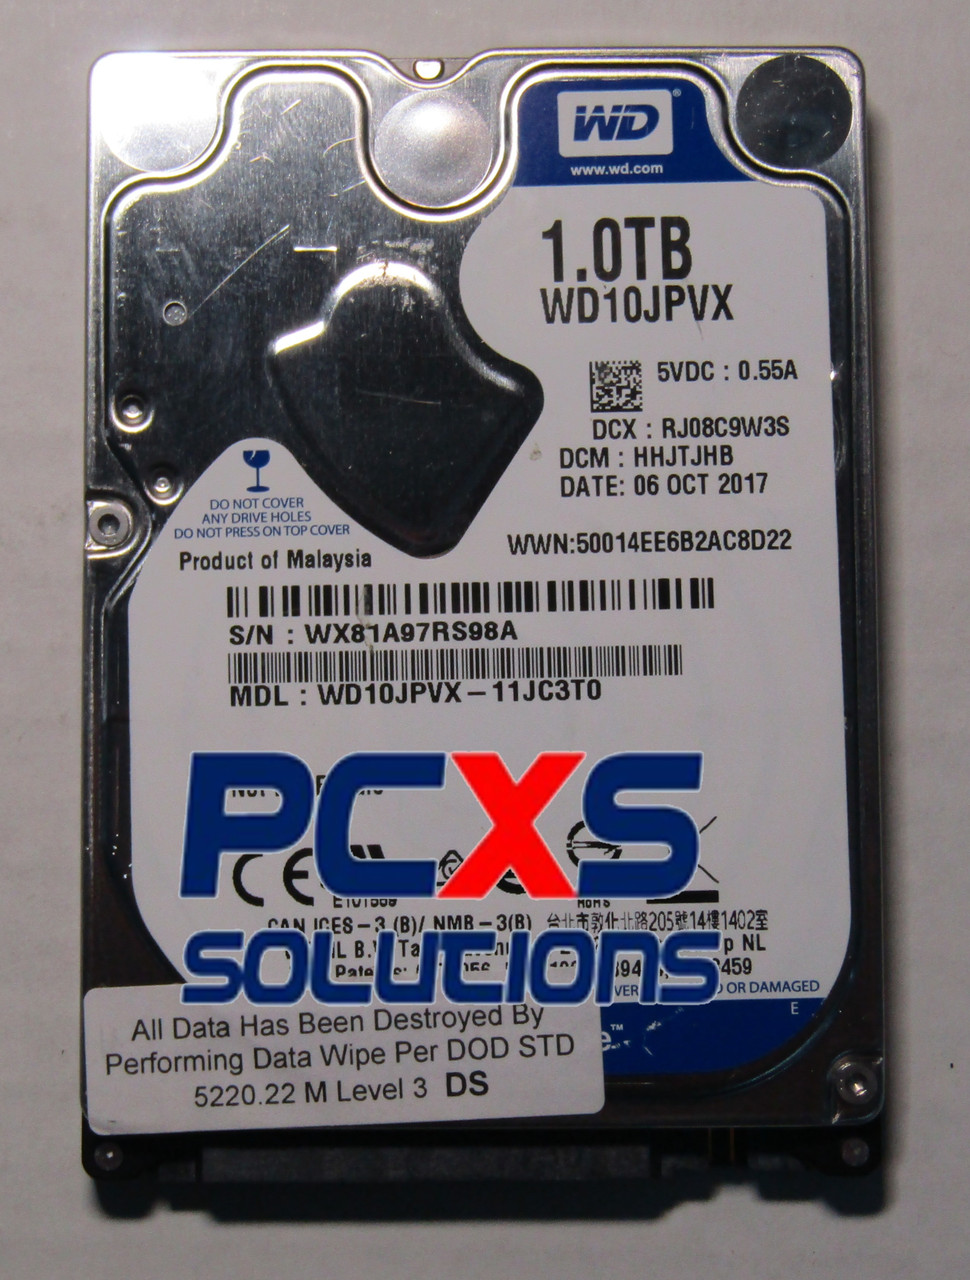 WD Blue 1TB Mobile Hard Disk Drive - 5400 RPM SATA 6 Gb/s 9.5 MM 2.5 Inch -  WD10JPVX.. - WD10JPVX